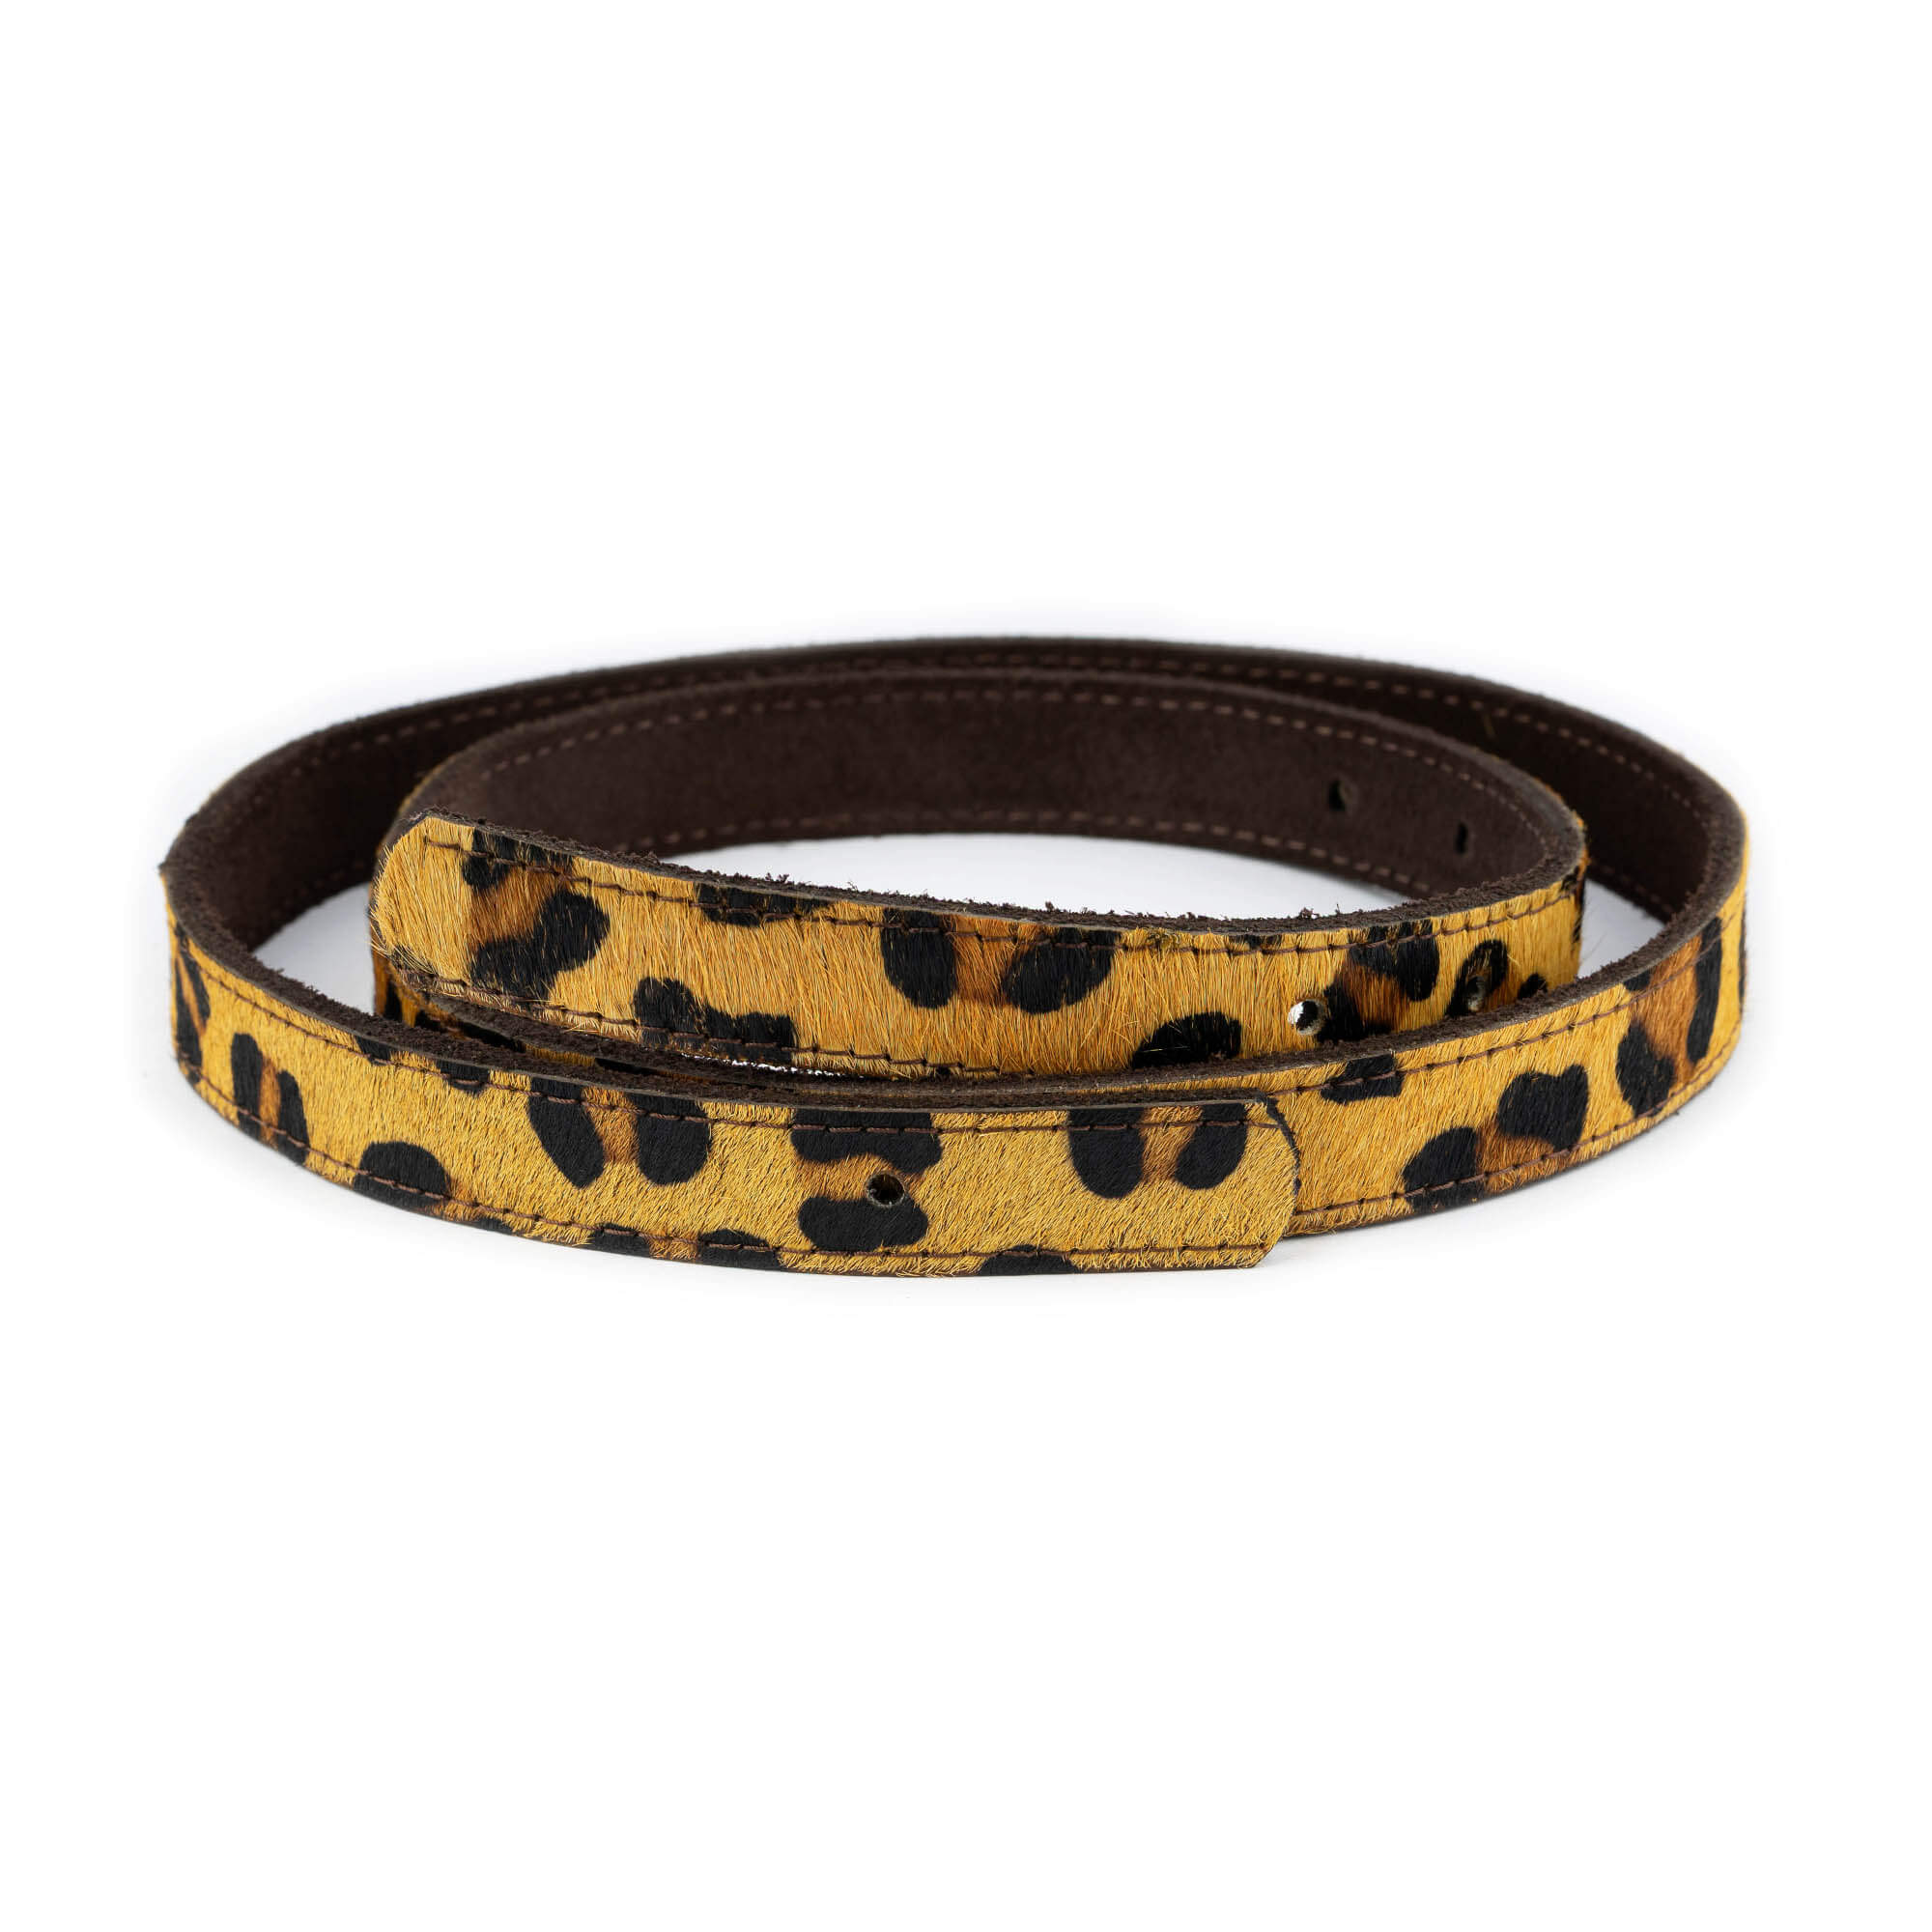 Buy Leopard Calf Hair Belt Strap For Buckle | Capo Pelle